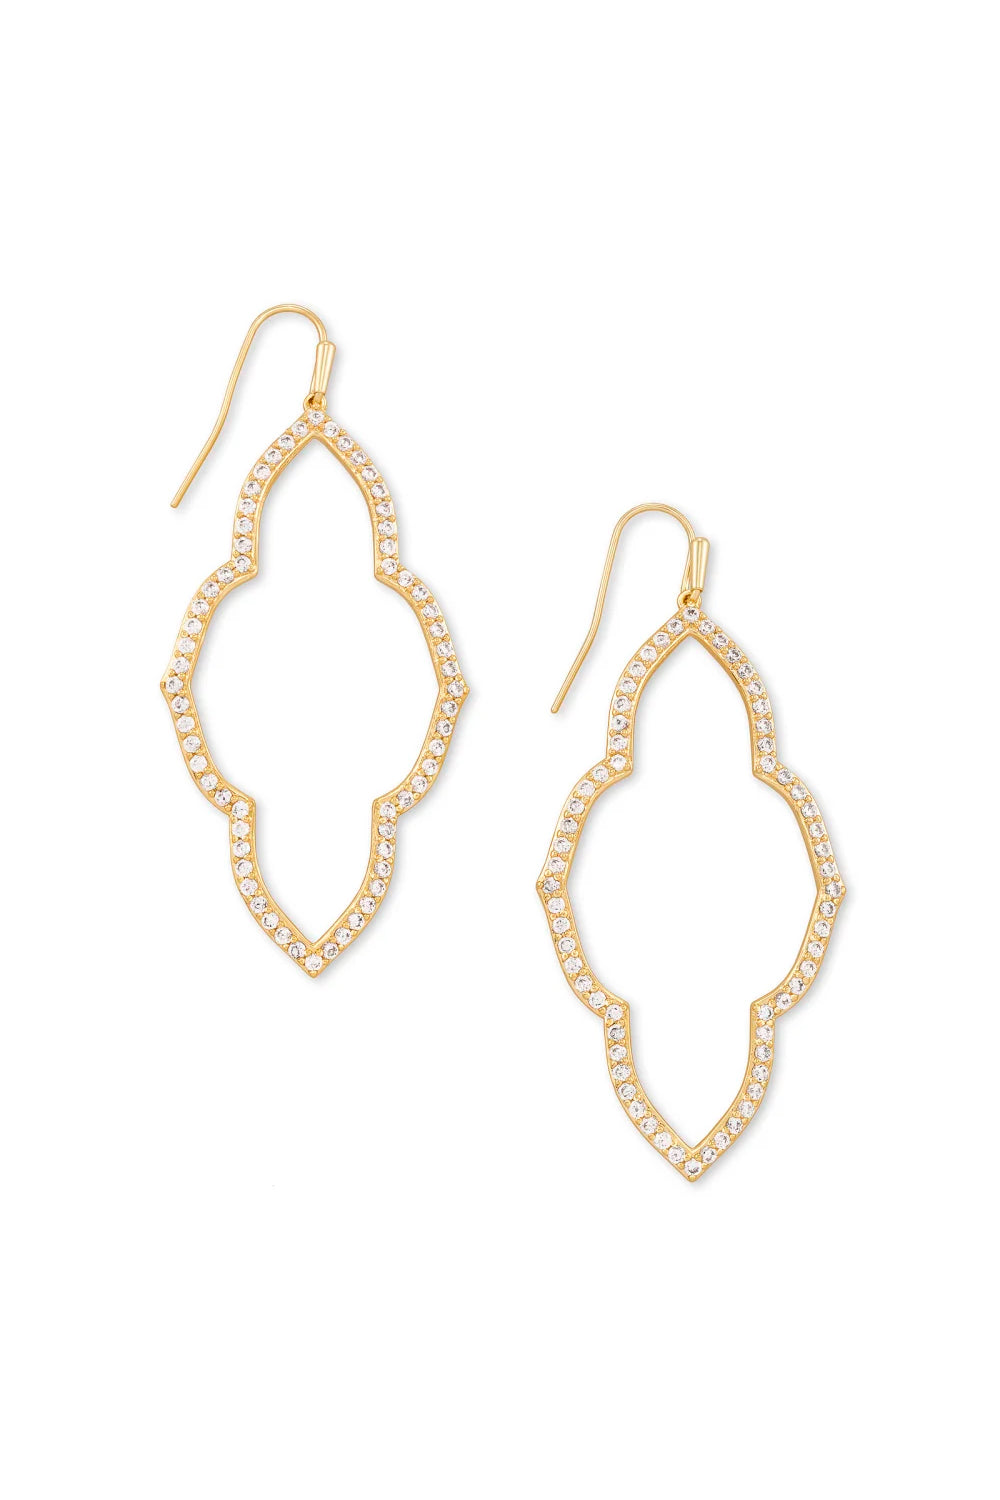 Kendra Scott: Abbie Gold Open Frame Earrings - White Crystal | Makk Fashions